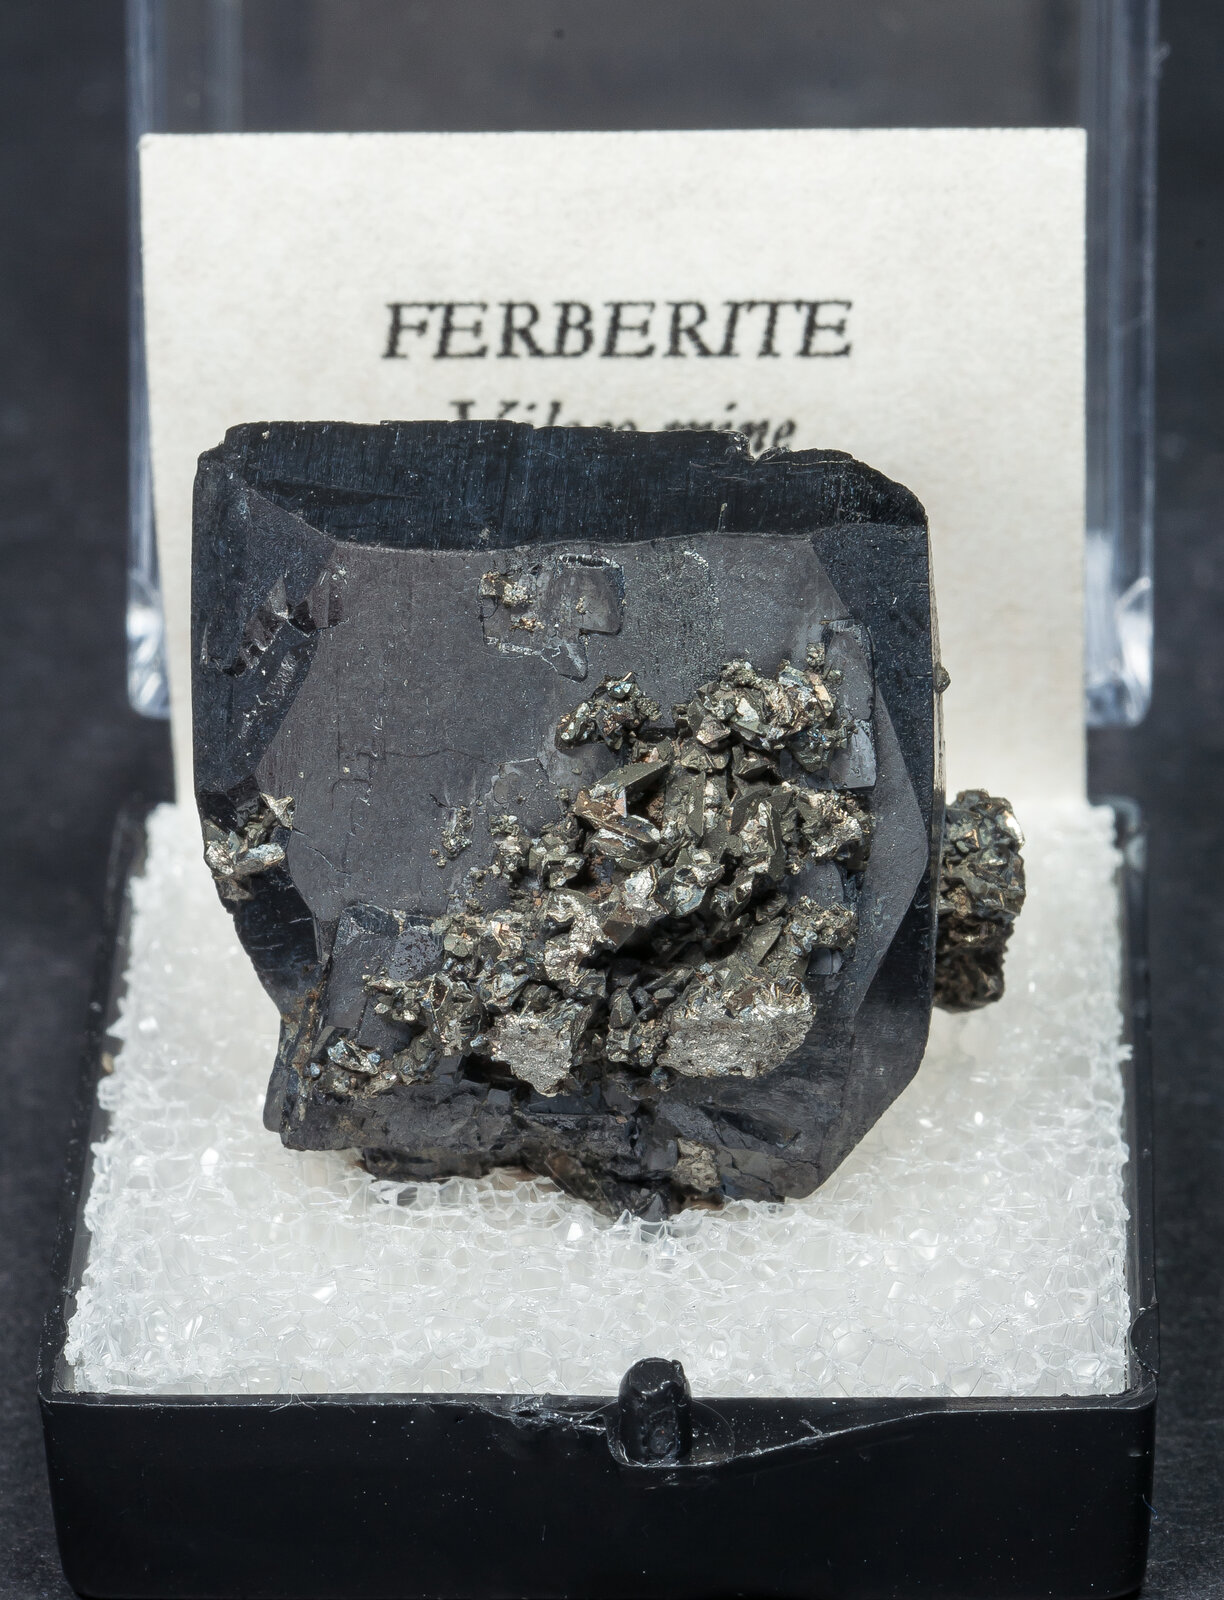 specimens/s_imagesAO4/Ferberite-TXF14AO4f1.jpg